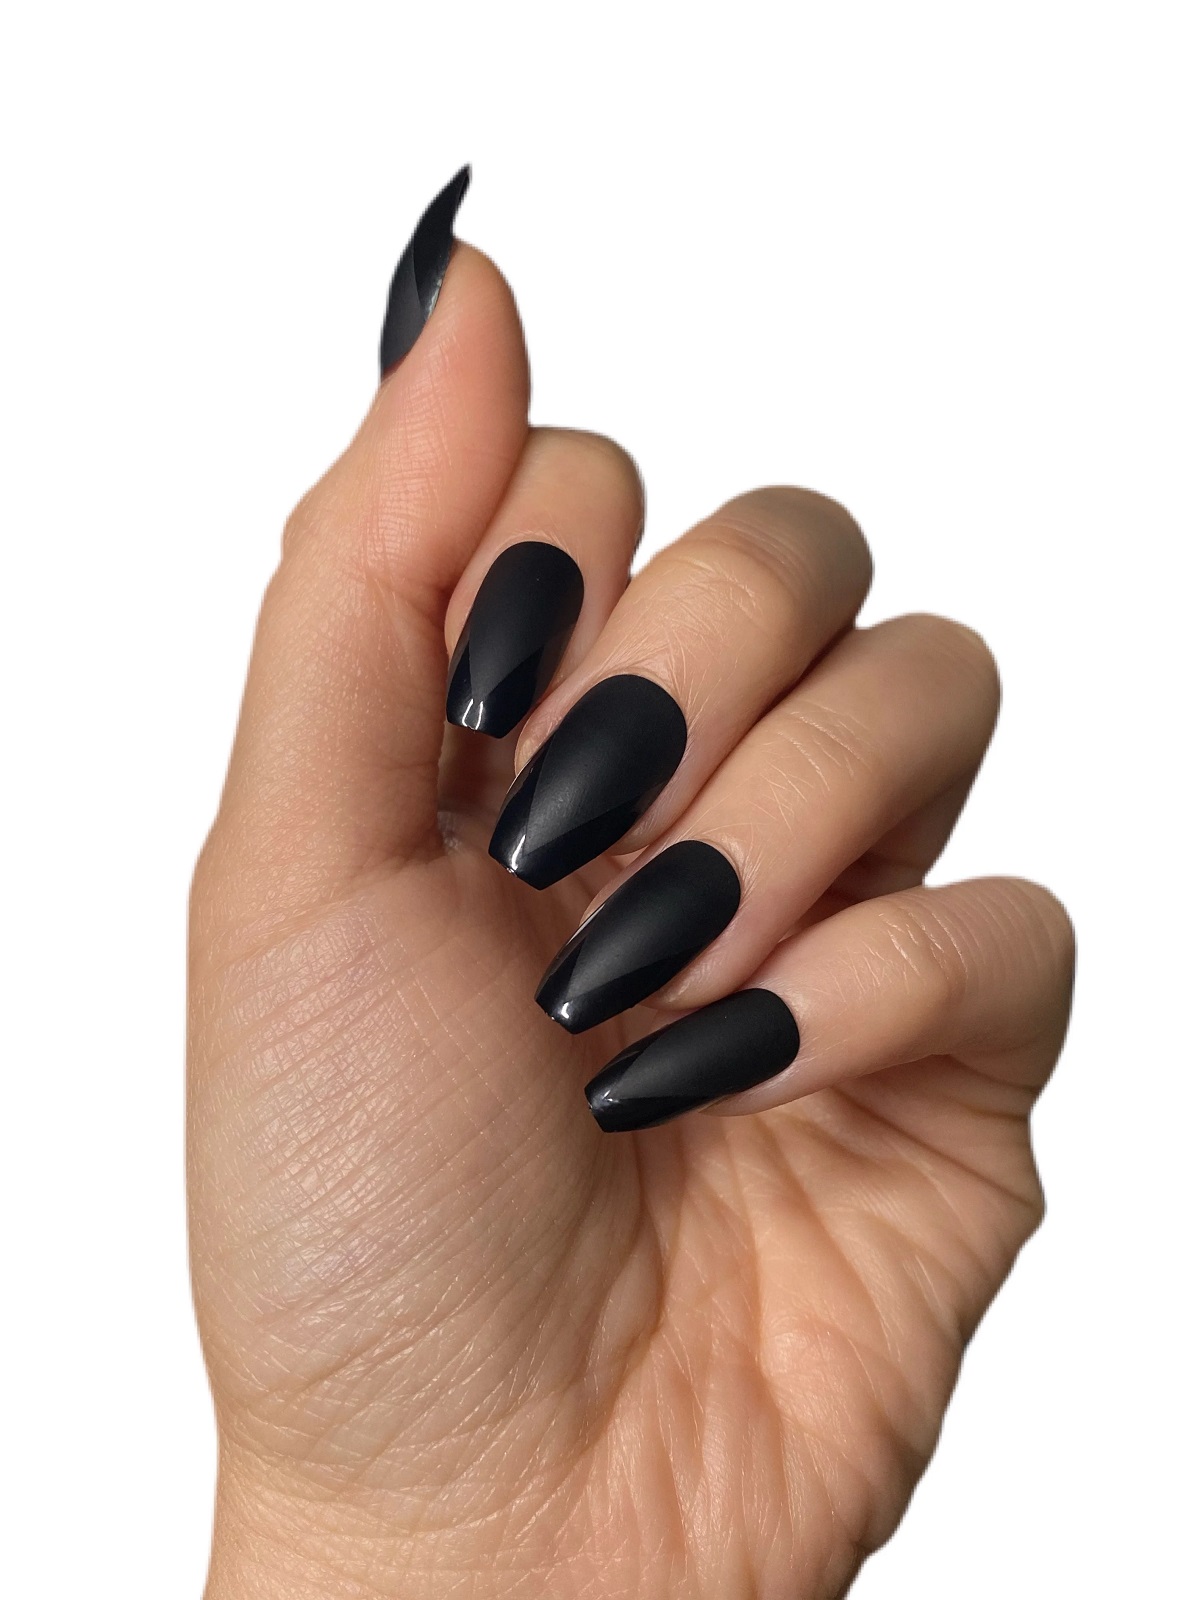 Matte Black “Leather” Nails